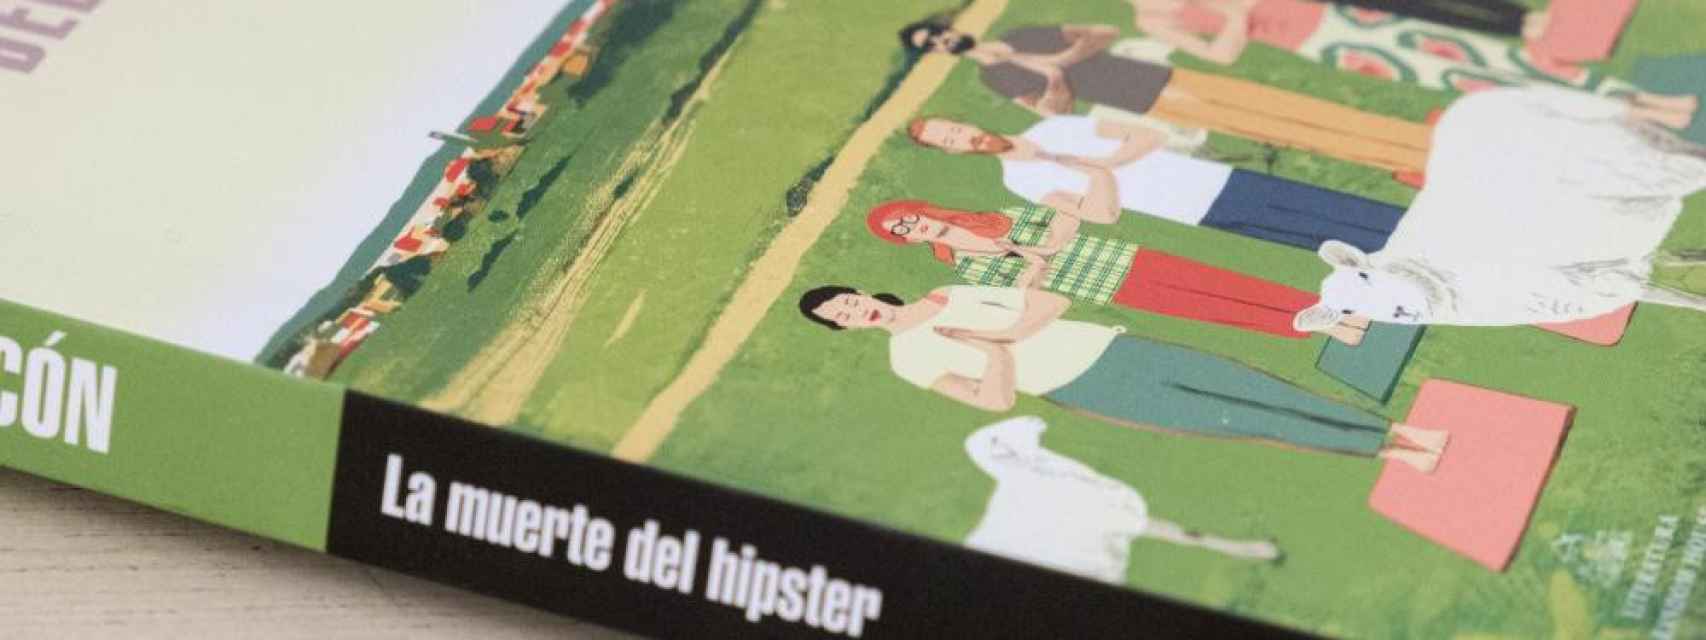 Portada del libro 'La muerte del hipster' de Daniel Gascón / PABLO MIRANZO